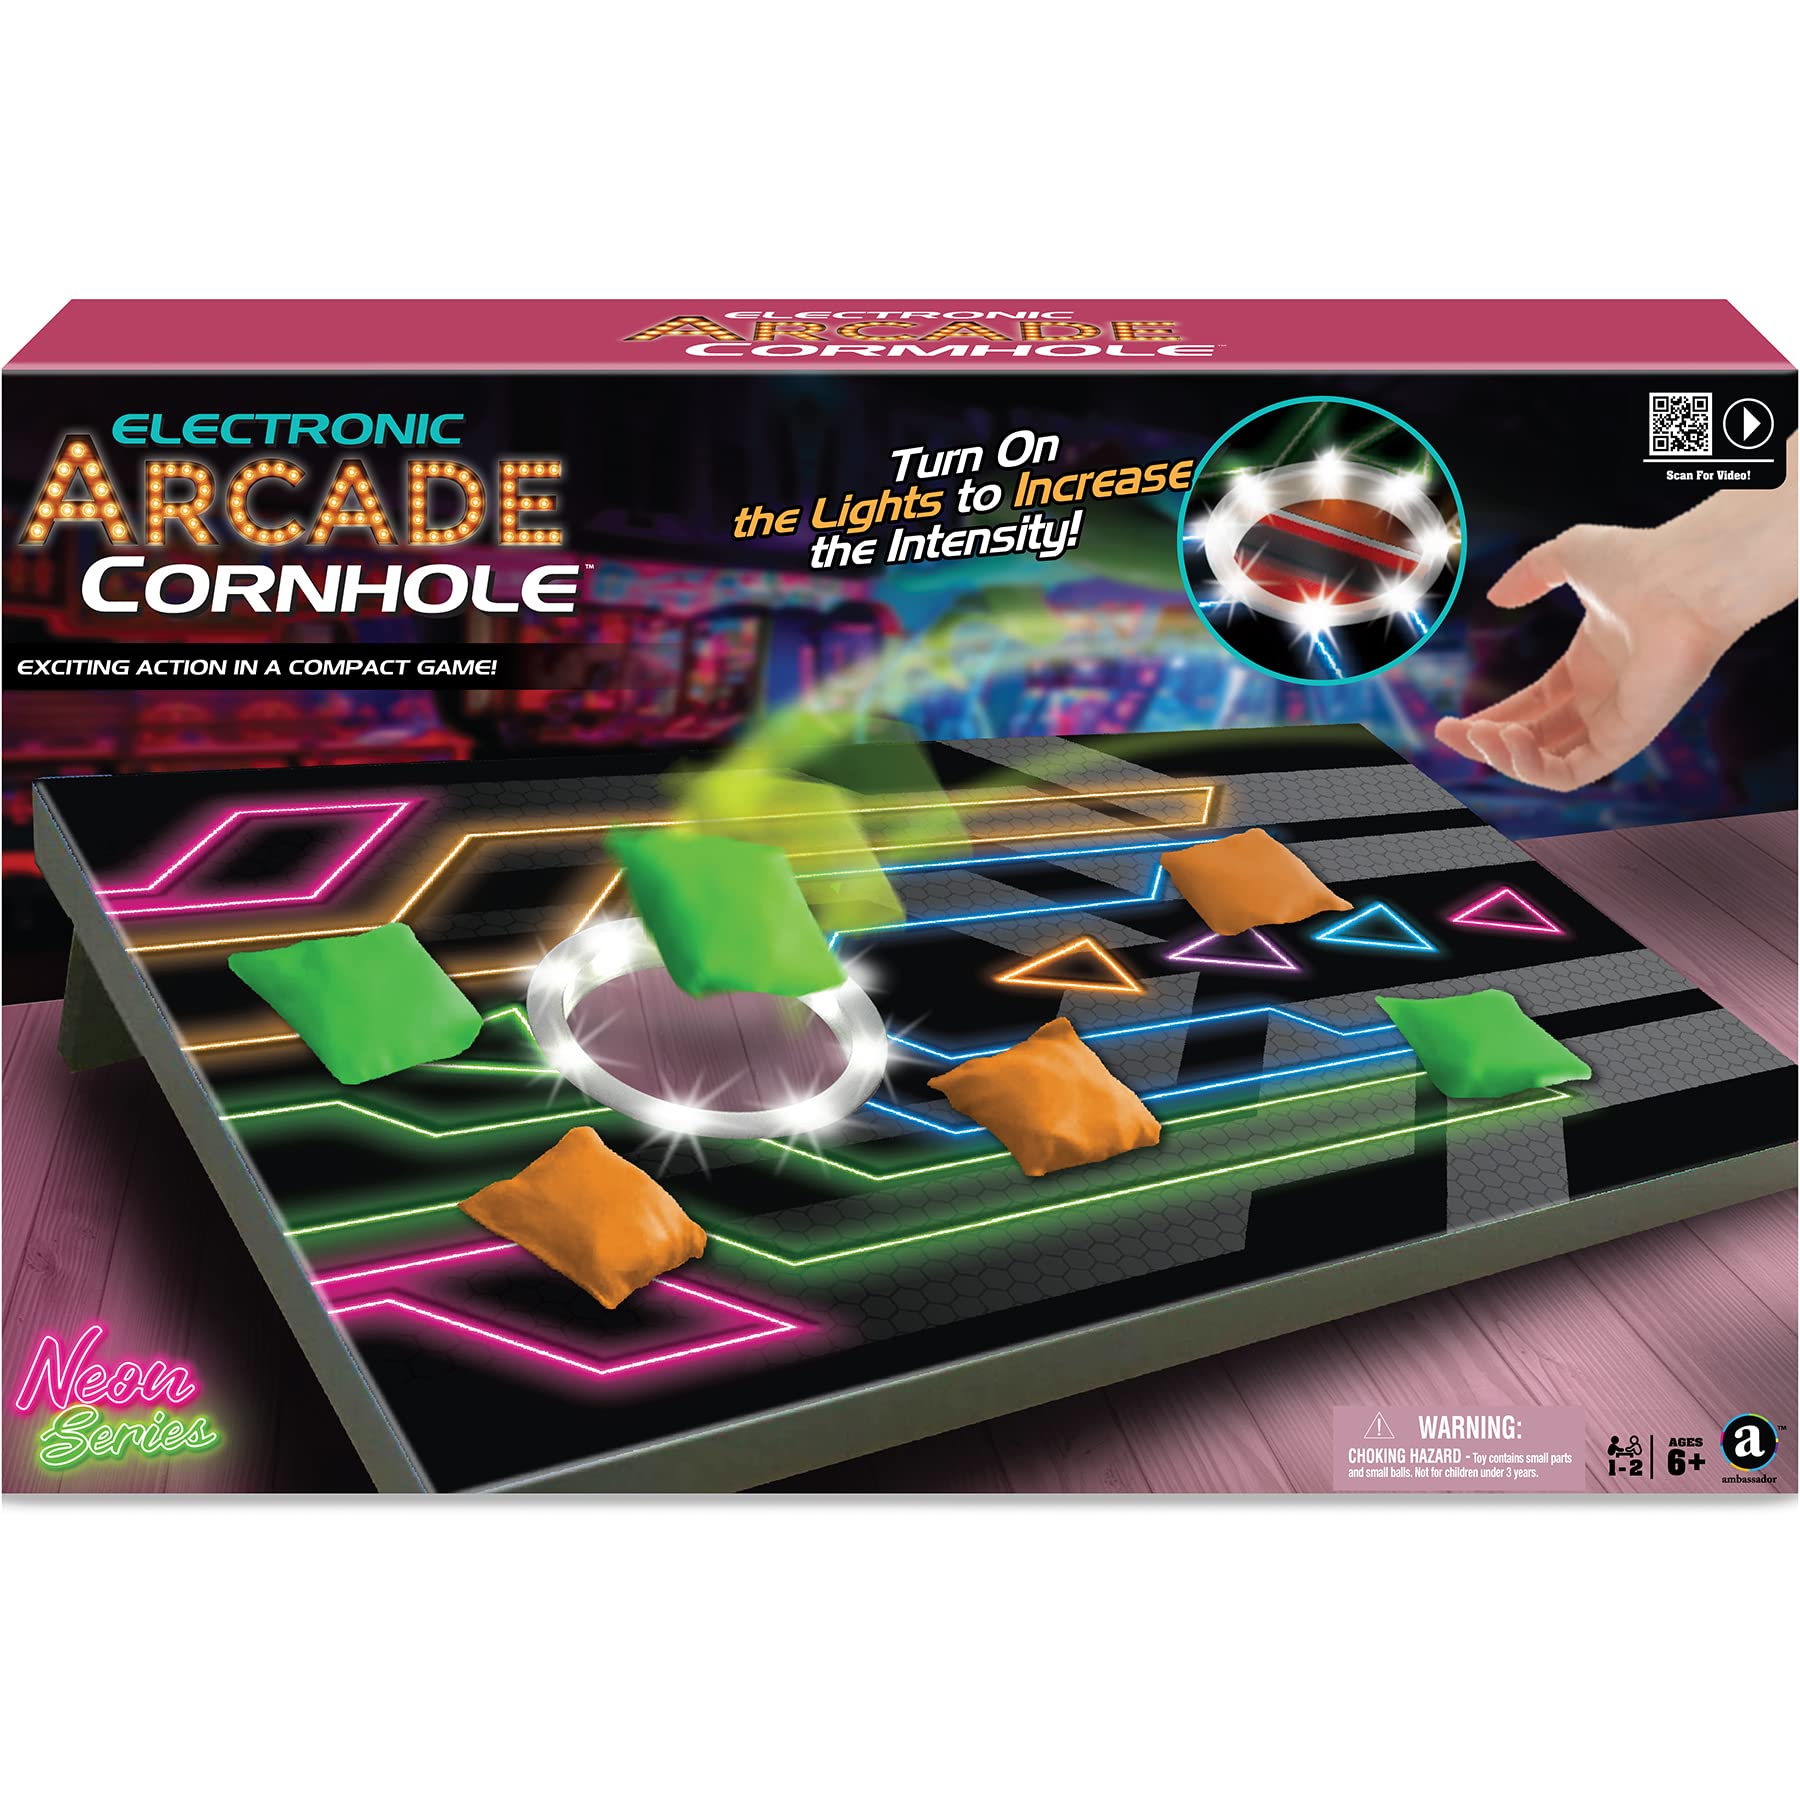 Ambassador Games Electronic Arcade Cornhole (Neon Series)